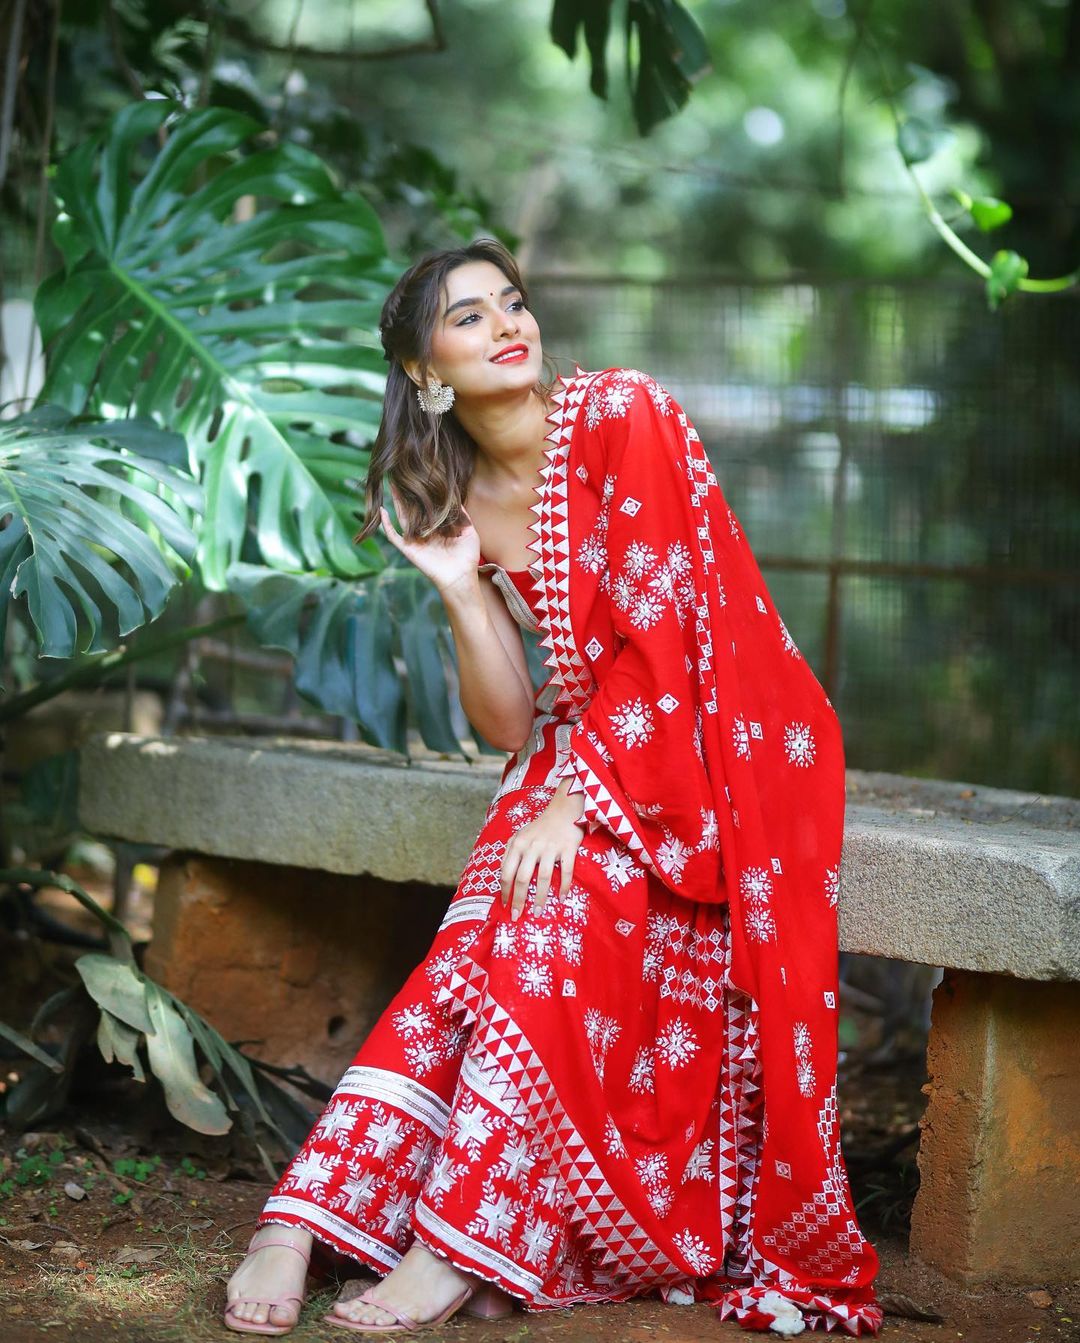 Saiee Manjrekar’s Fashionable Outfits Style And Looks